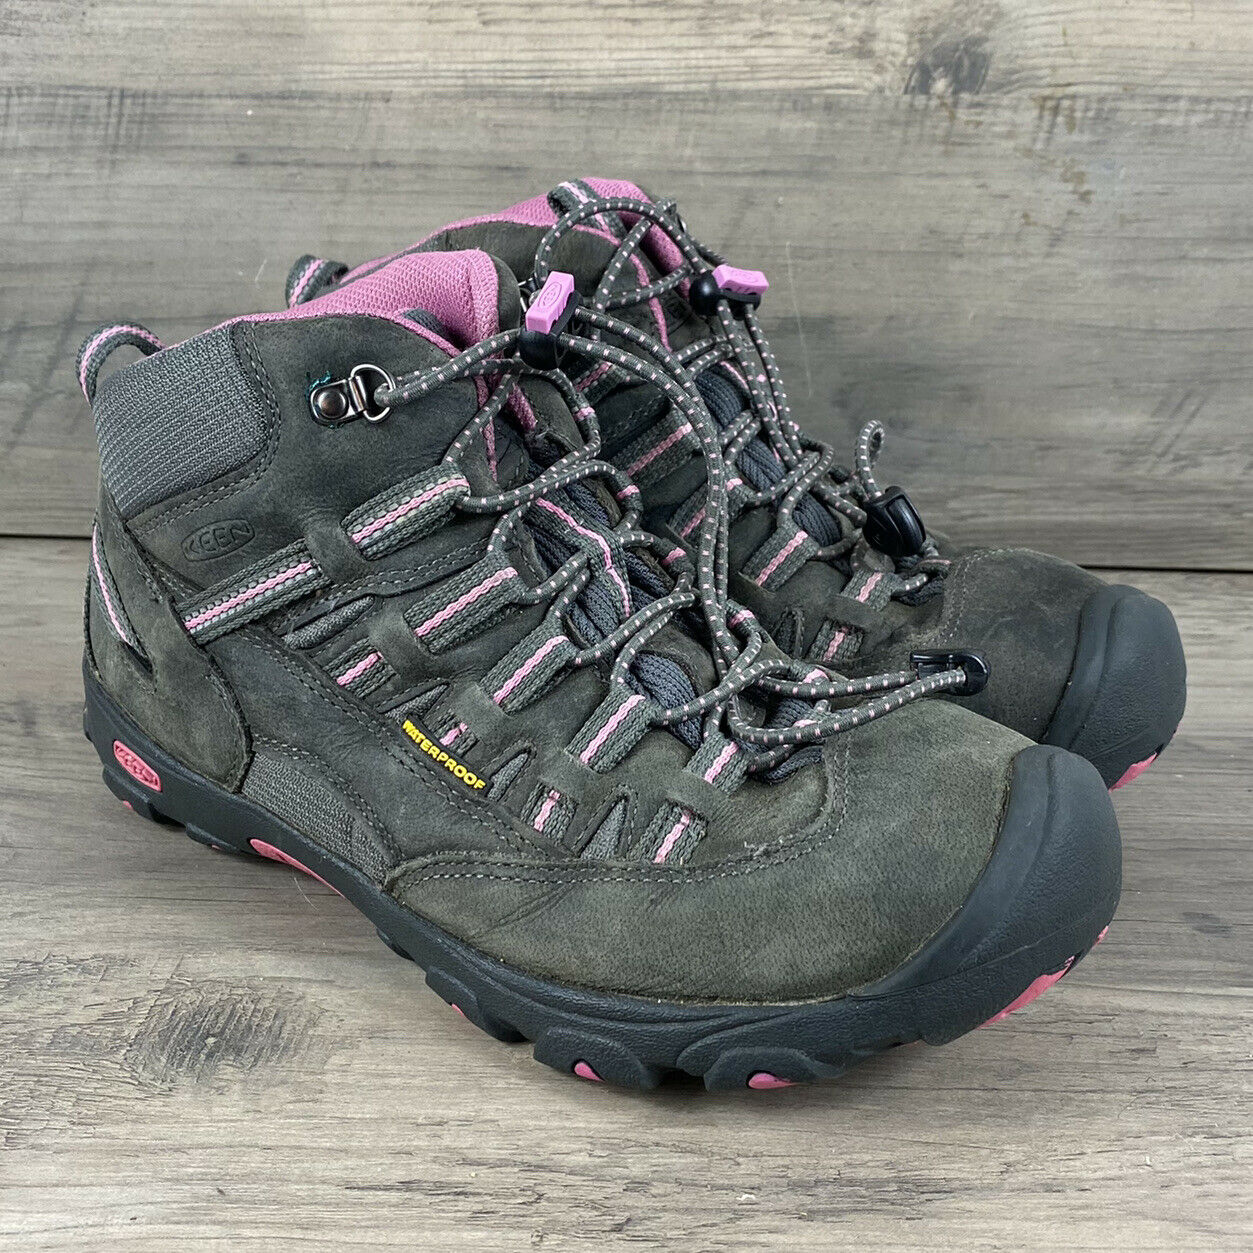 Keen Targhee III Mid Hiking Boots Women’s Size 5 Gray/Pink Leather Waterproof